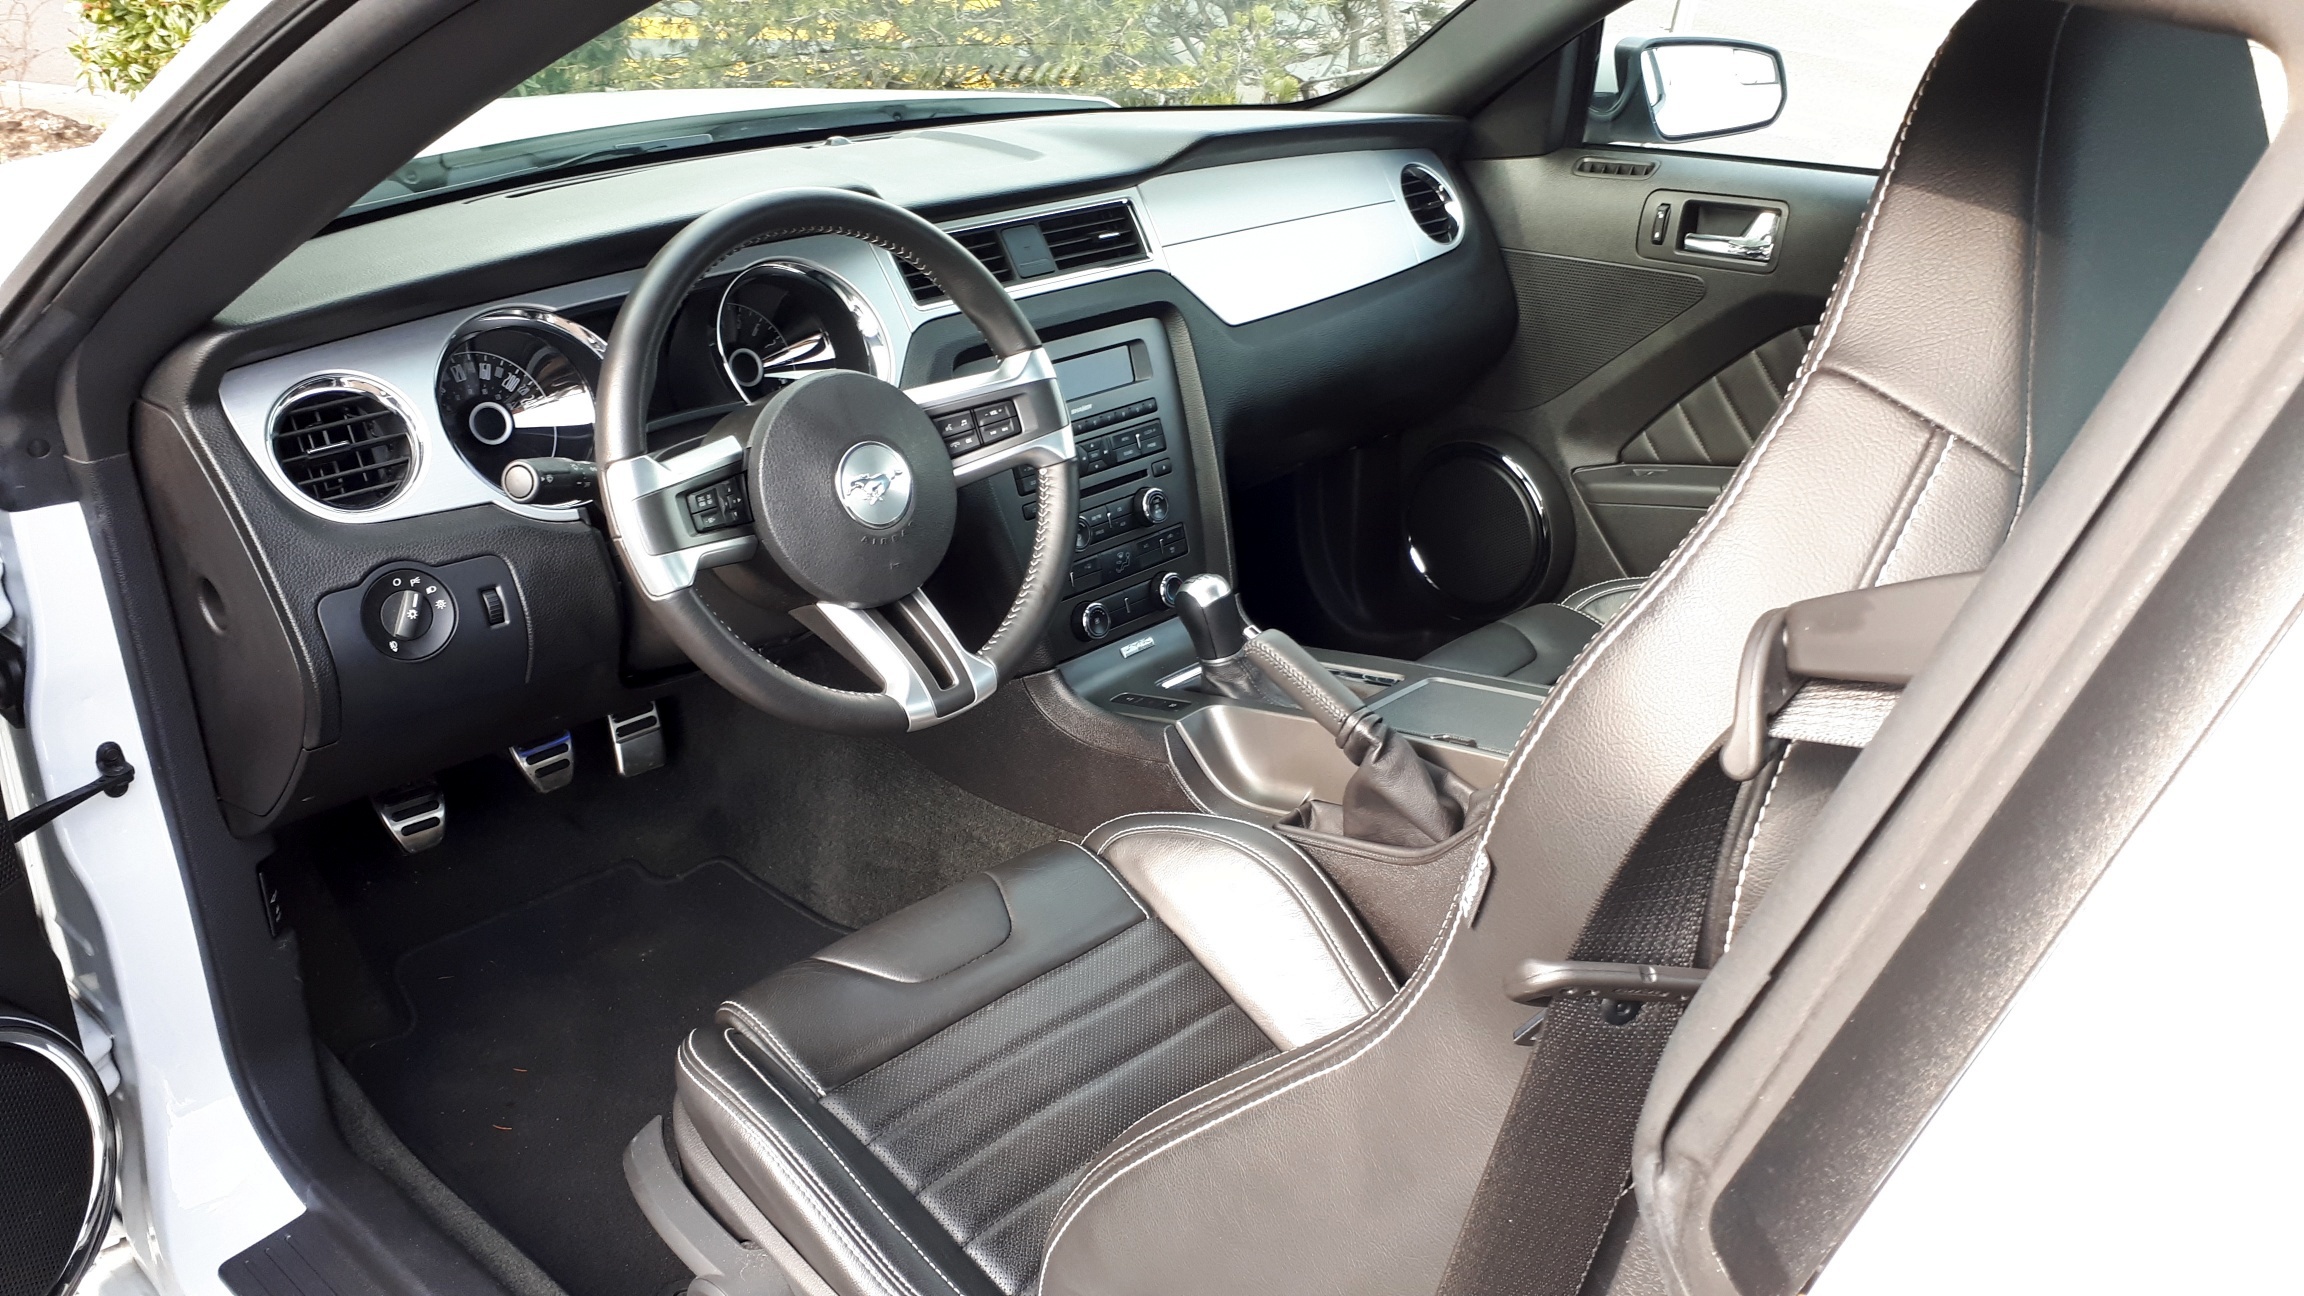 Mustang GT 13 ex Bachofner instr. panel